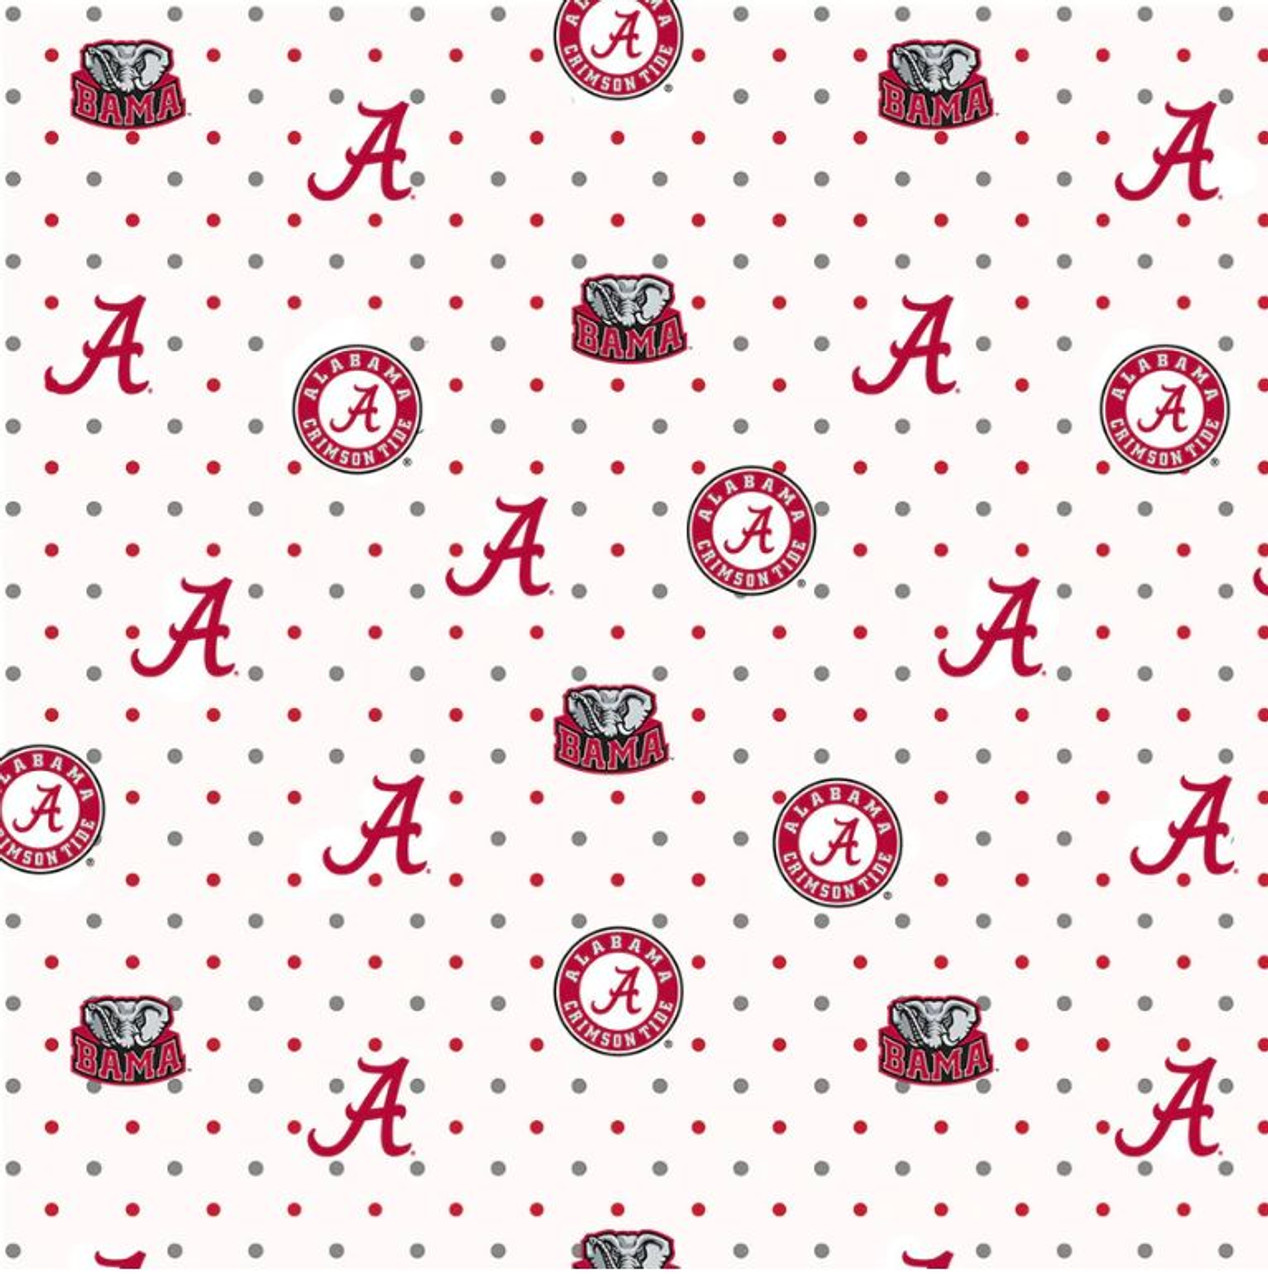 University of Alabama Crimson Tide Cotton Fabric with White Polka Dot Print and Matching Solid Cotton Fabrics